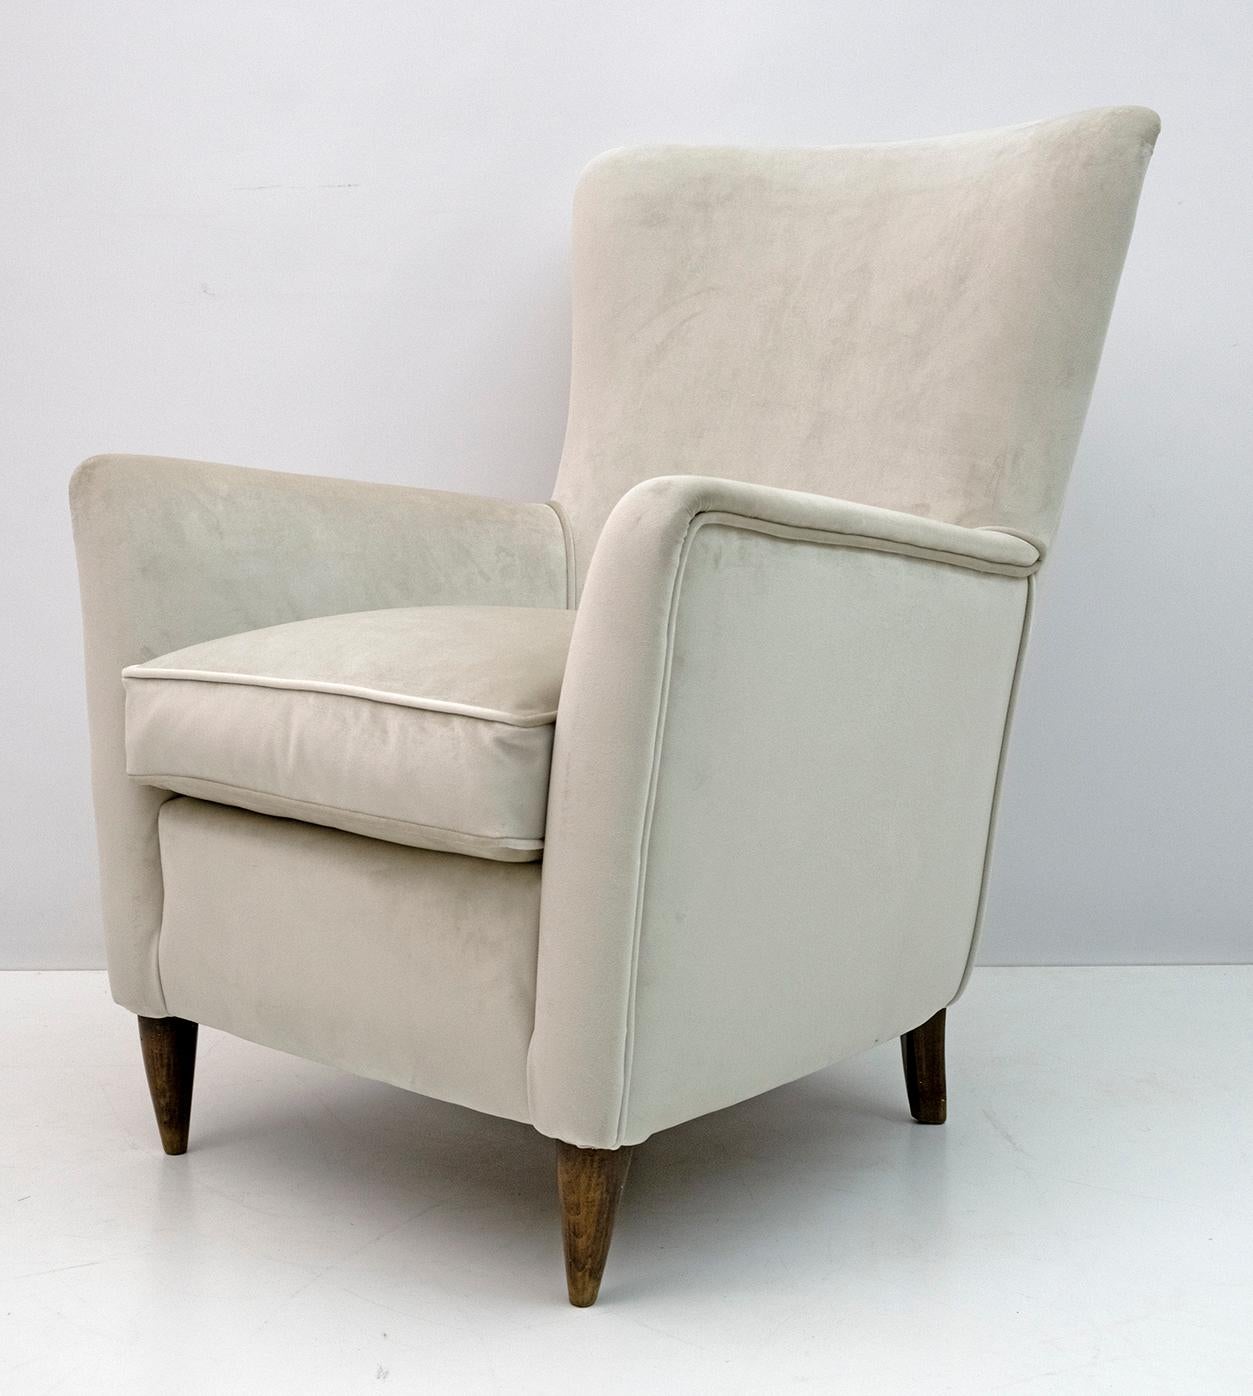 Pair of Gio Ponti Style Mid-Century Modern Italian Velvet Armchairs for Isa, 50s For Sale 8